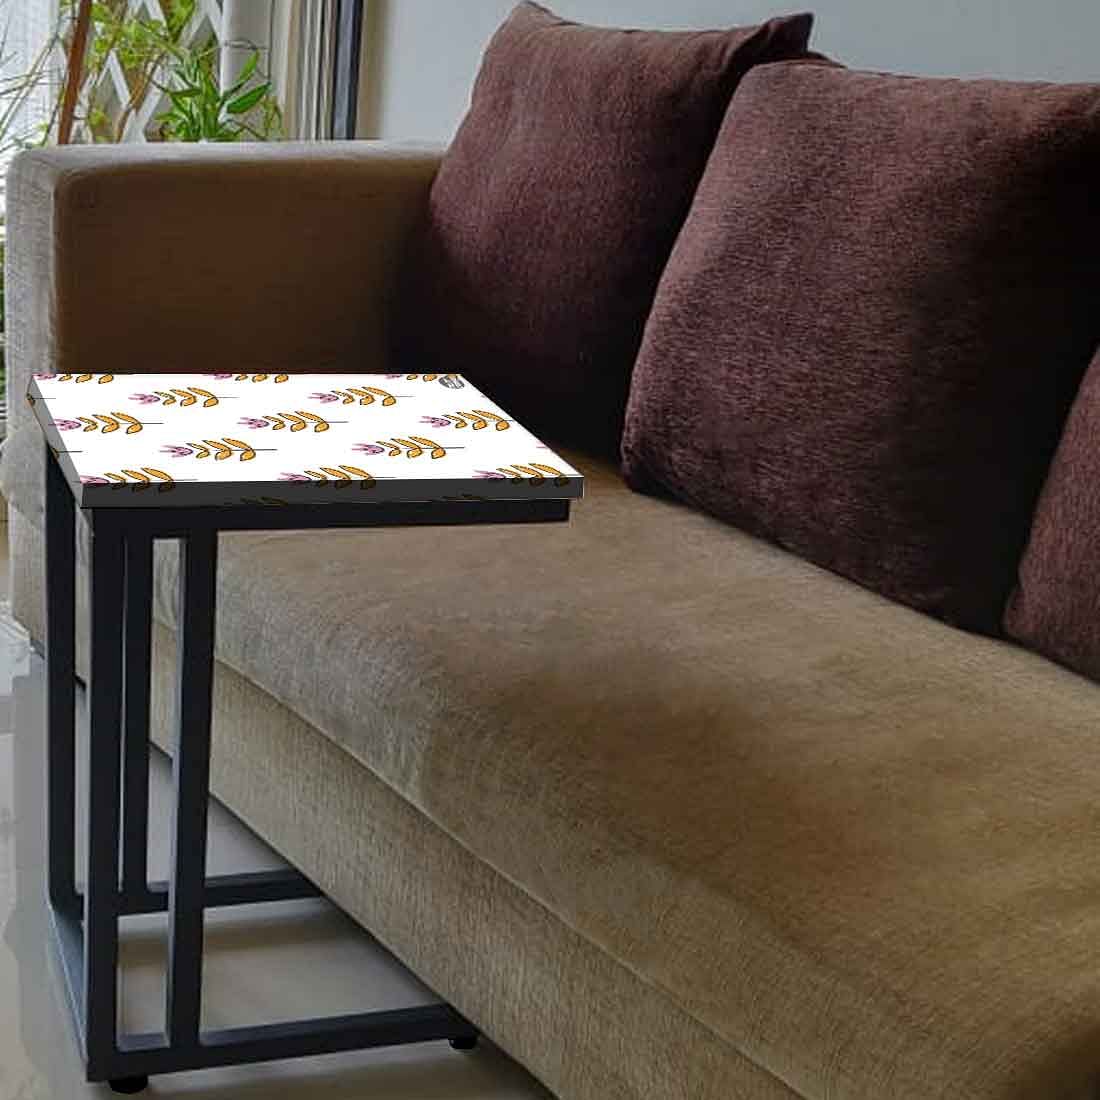 Floral C Shaped Table For Sofa - Ethnic Leaf Nutcase